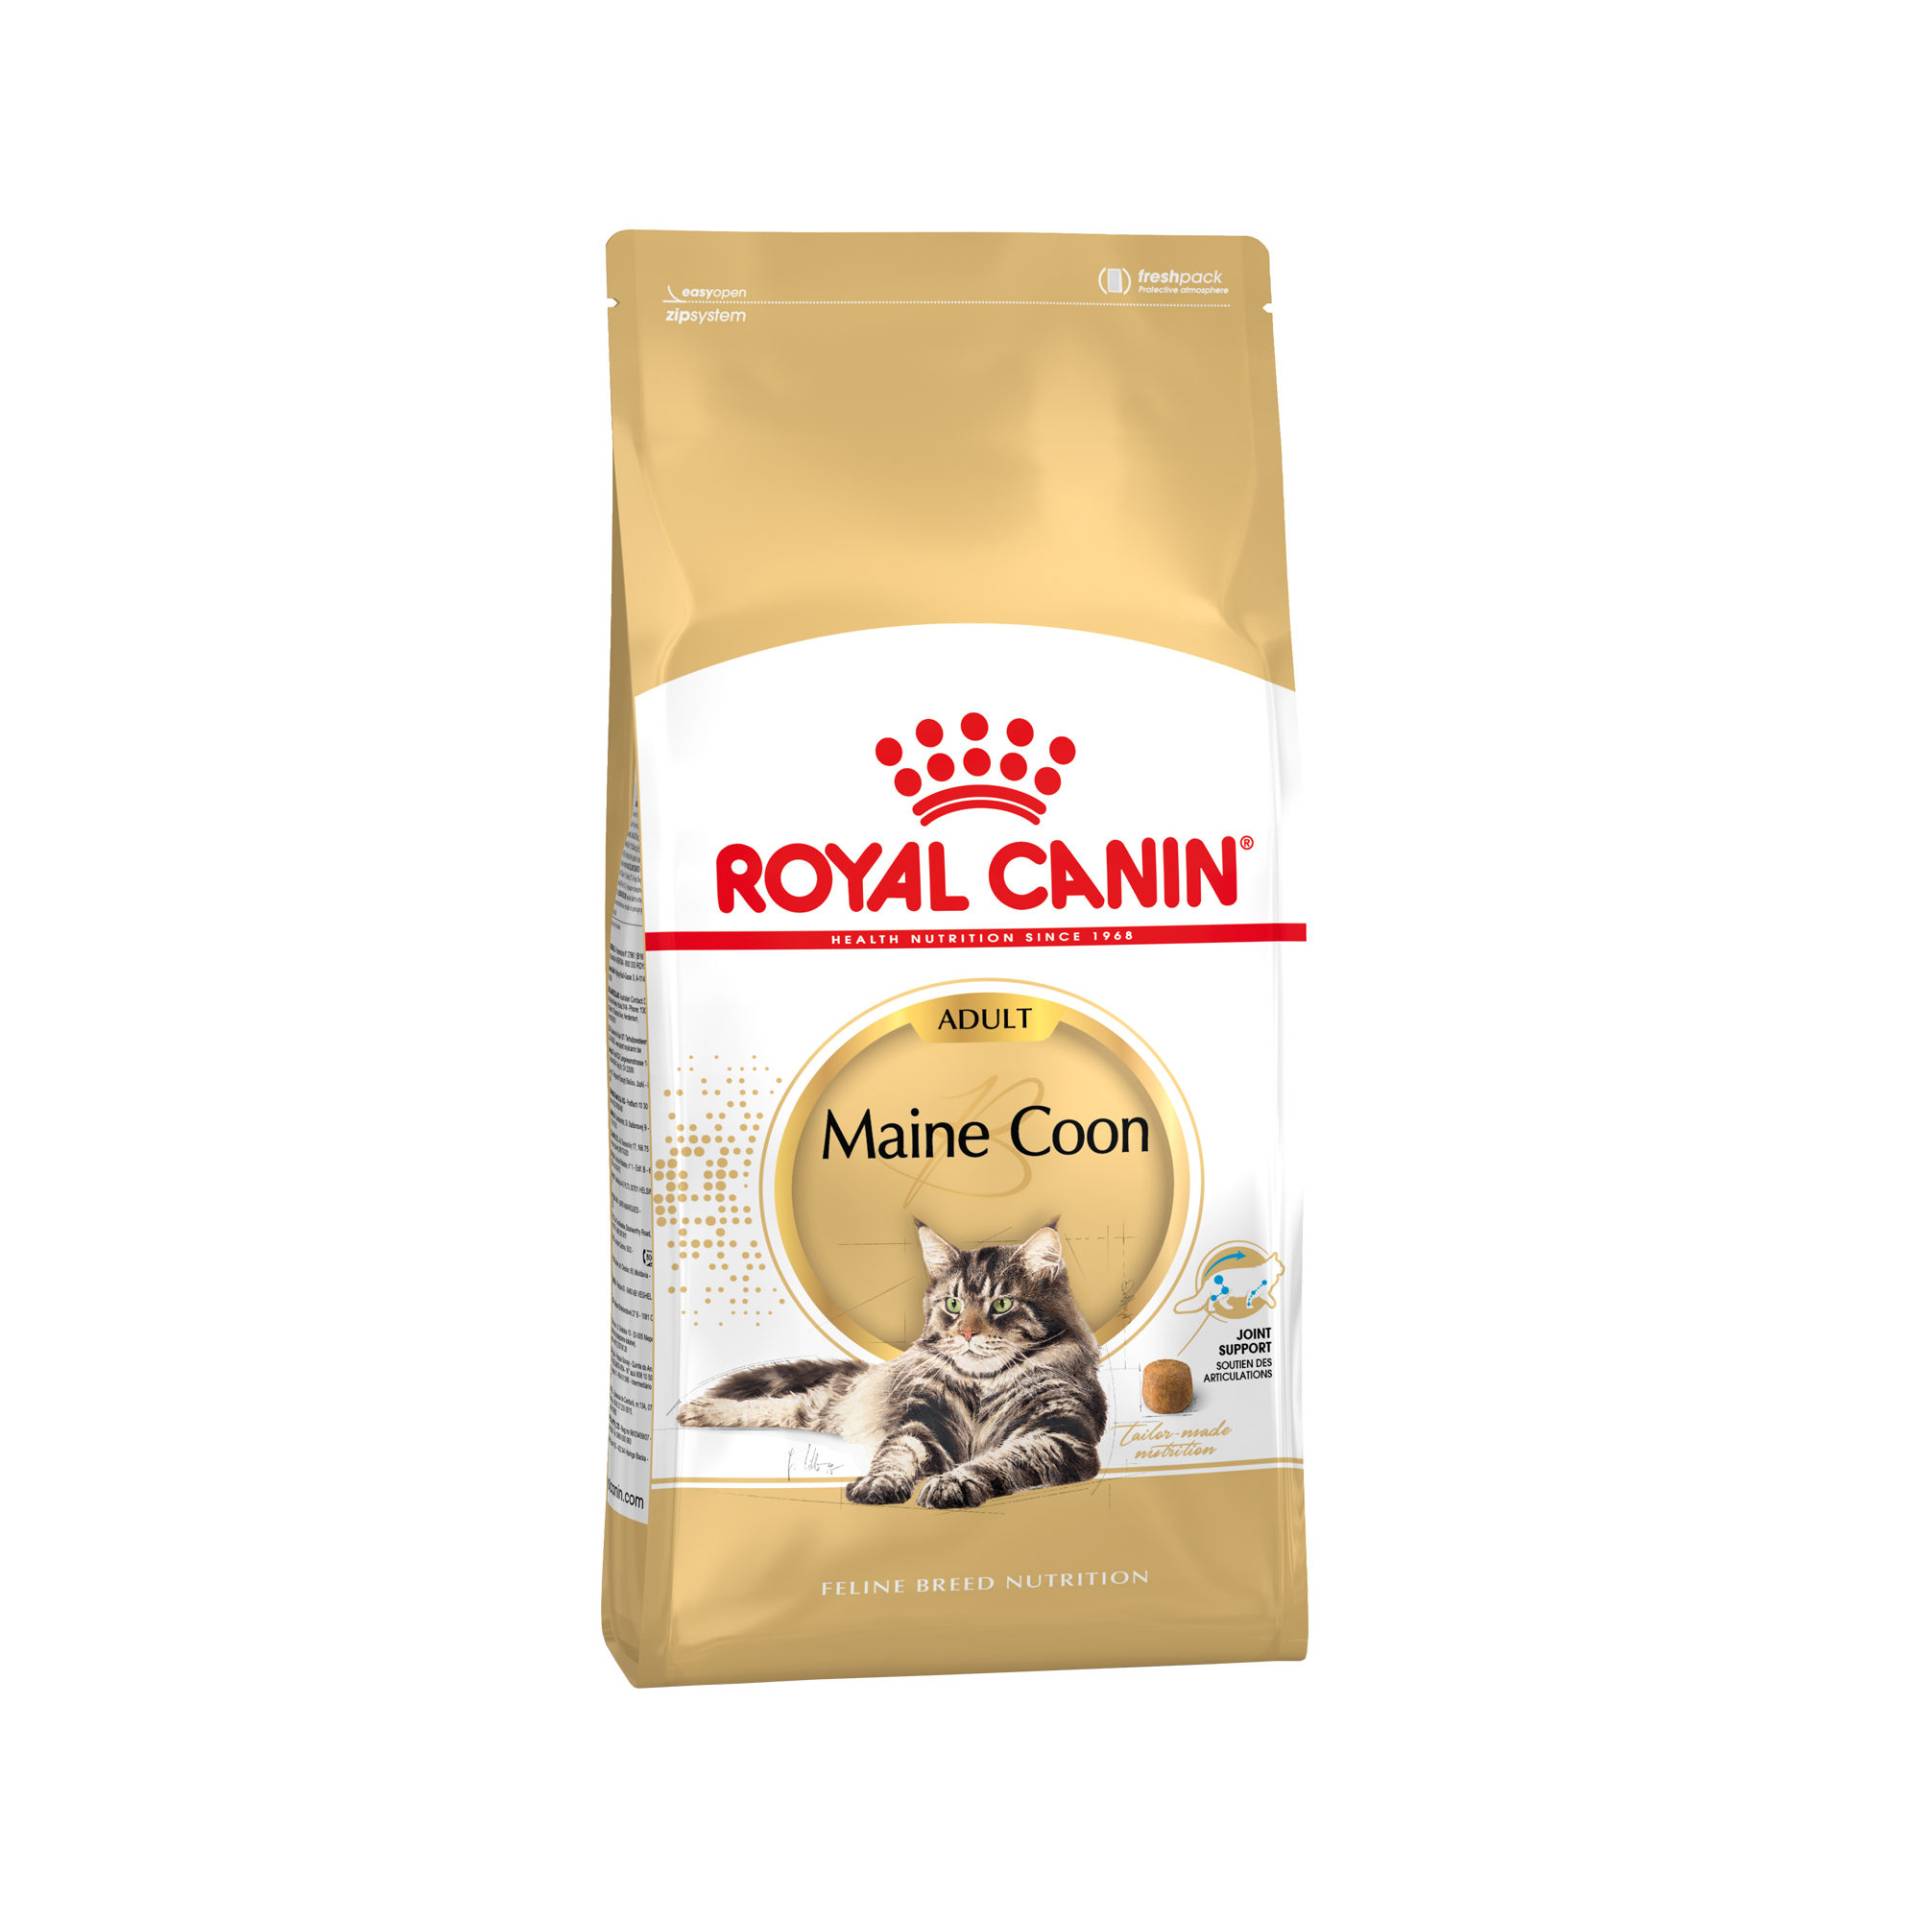 Royal Canin Maine Coon Adult Katzenfutter - 2 kg von Royal Canin